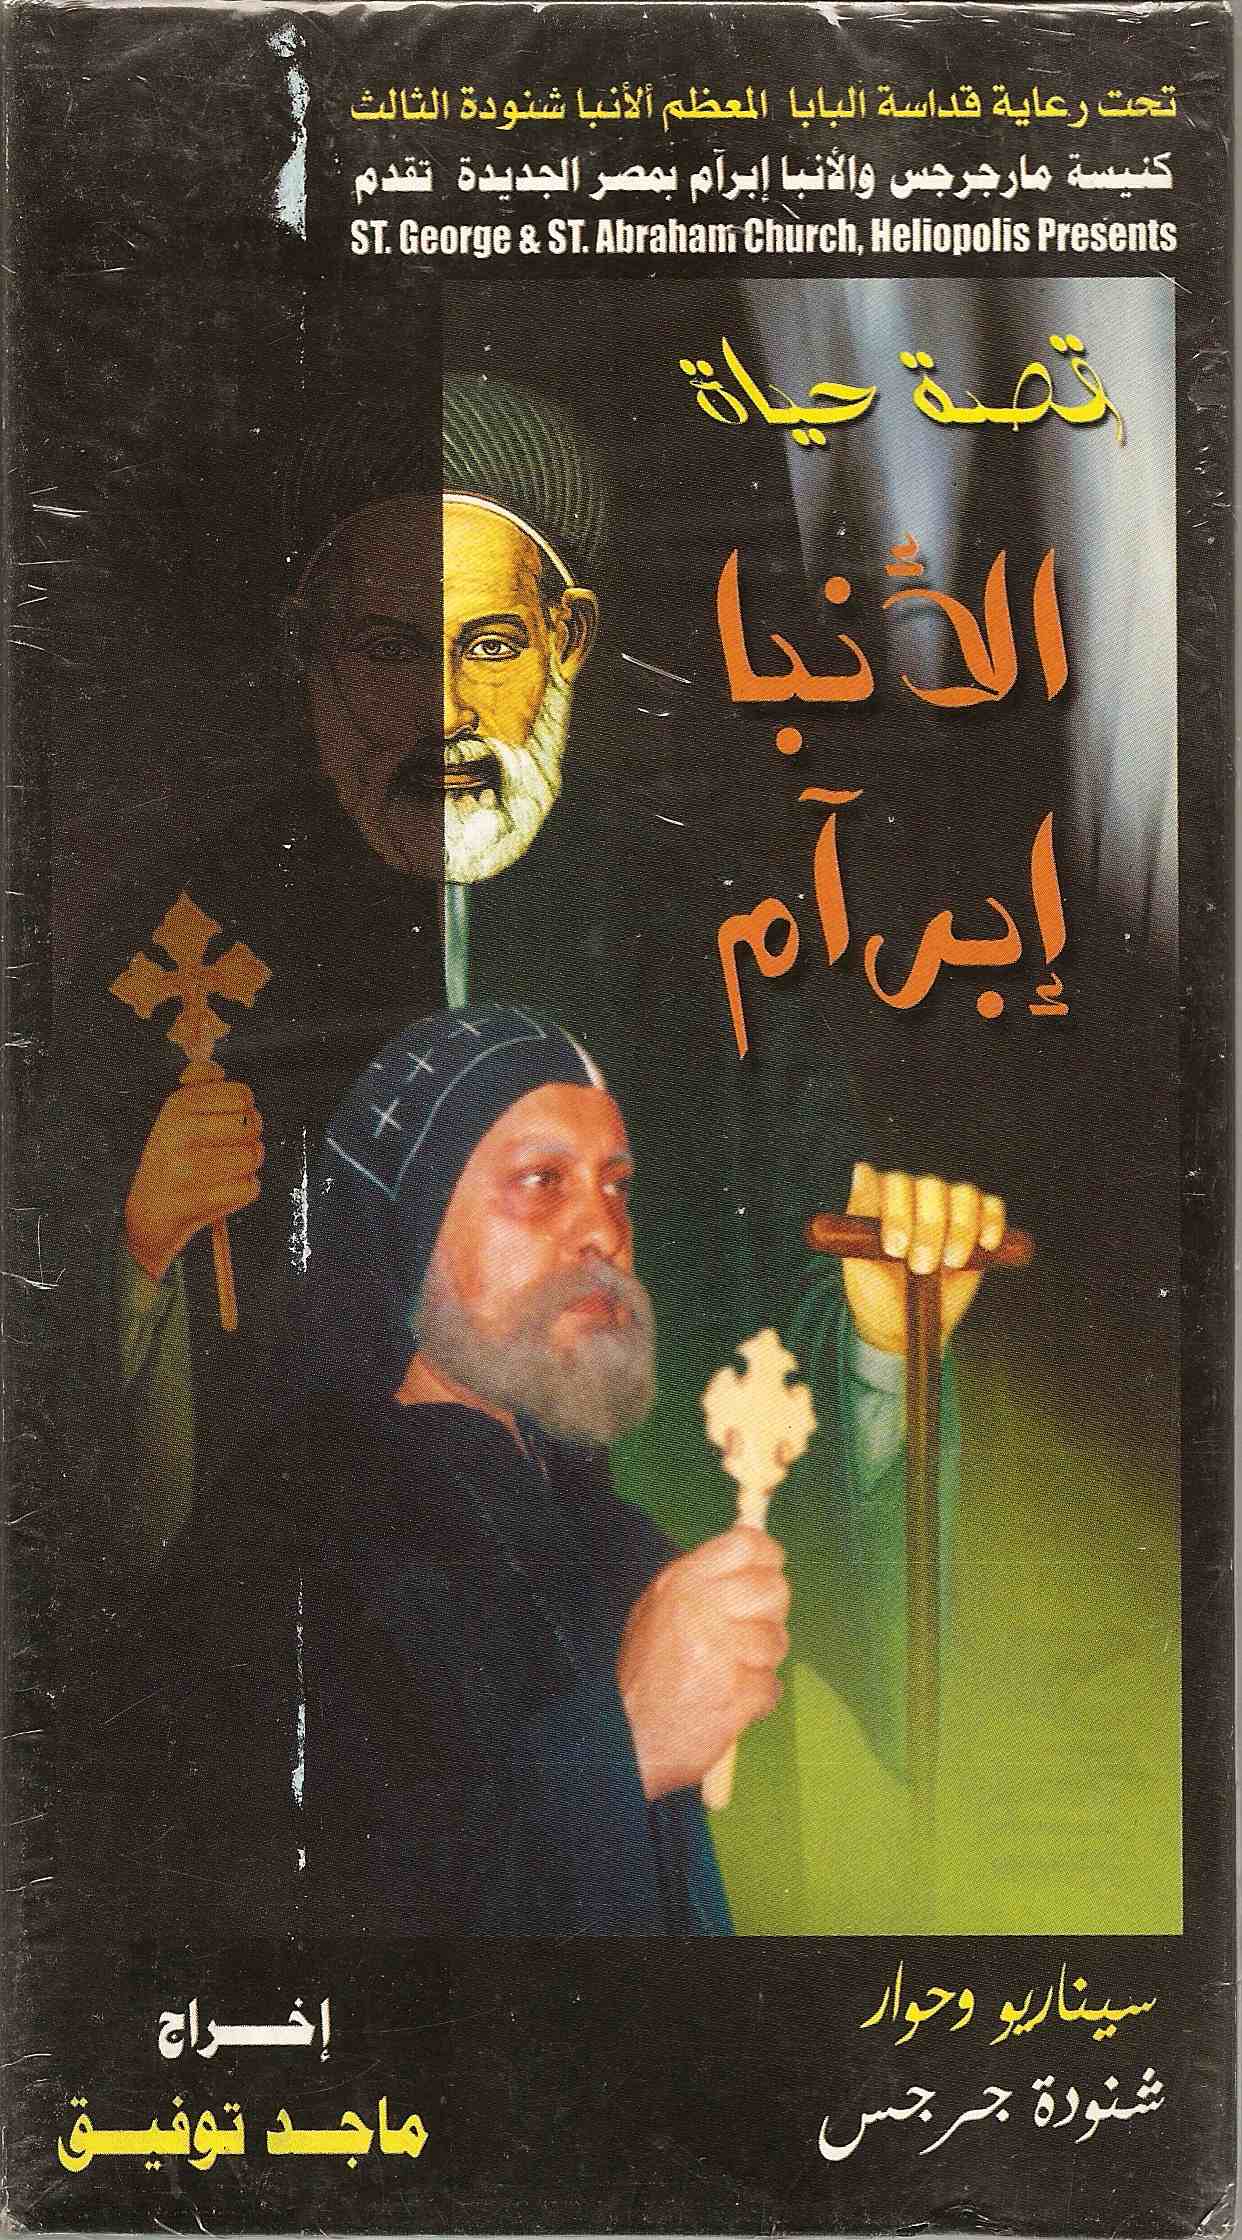 Father Ebram